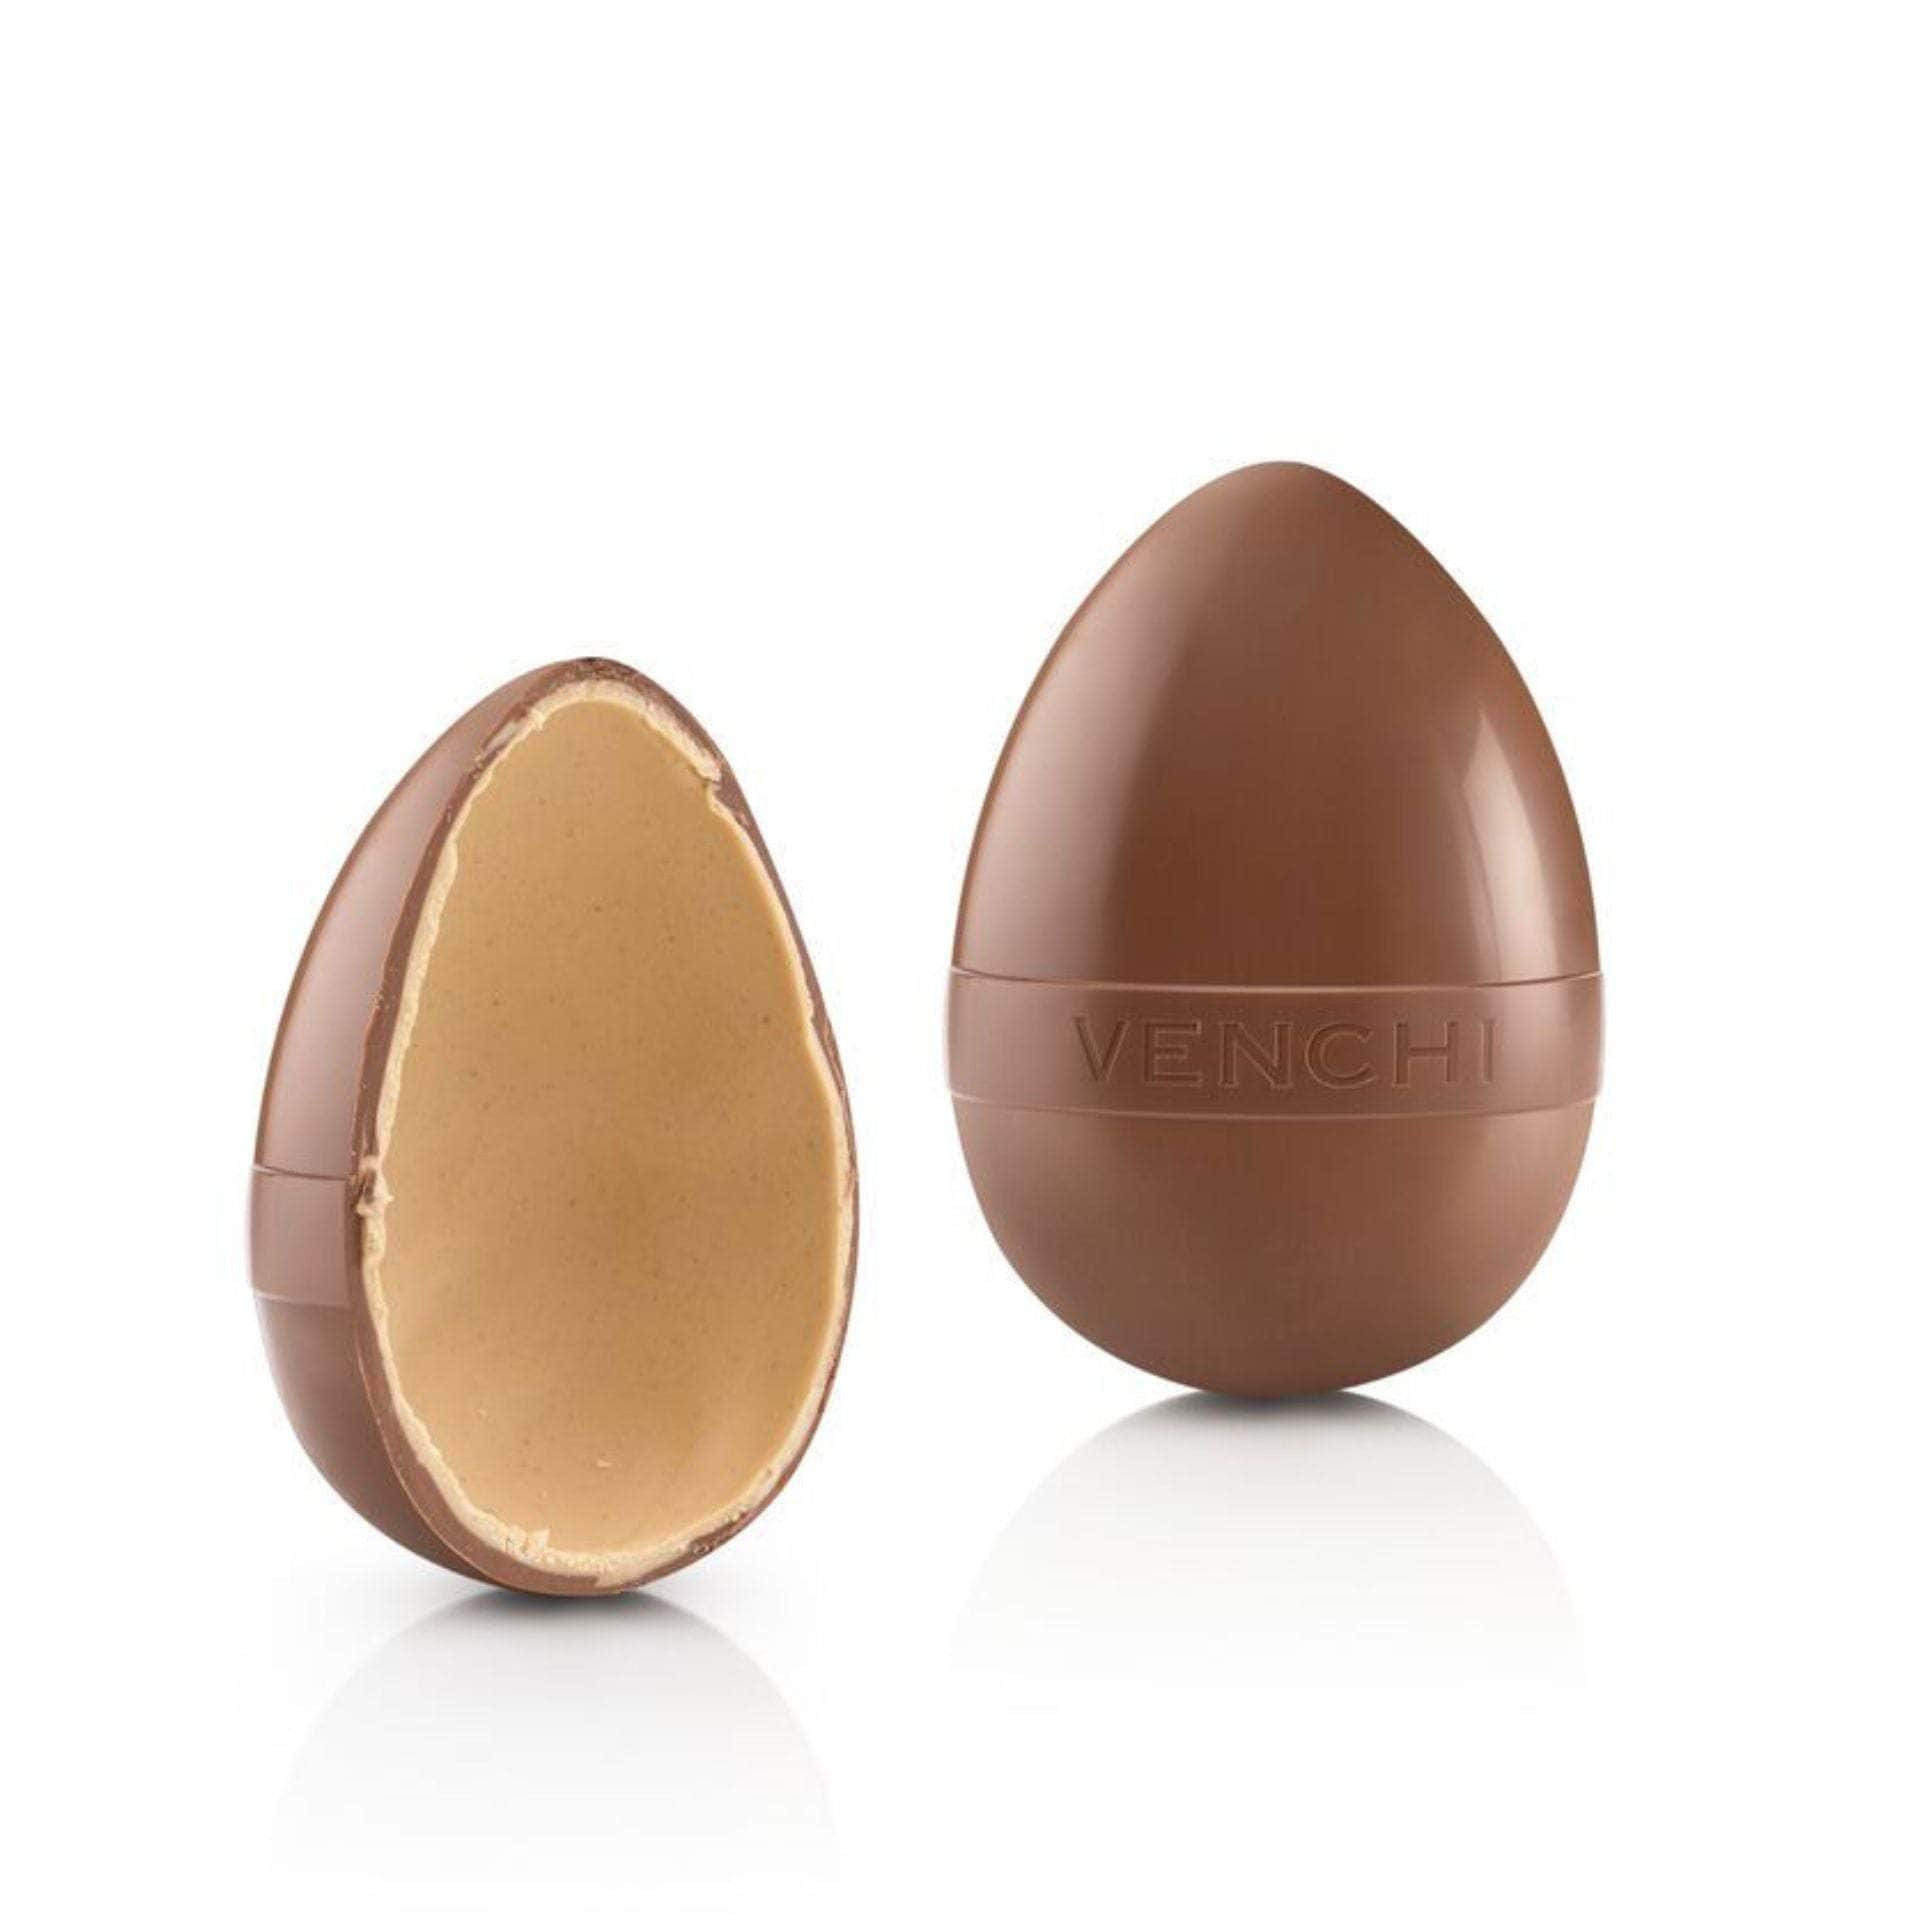 “Cremino” Hazelnut Chocolate Egg